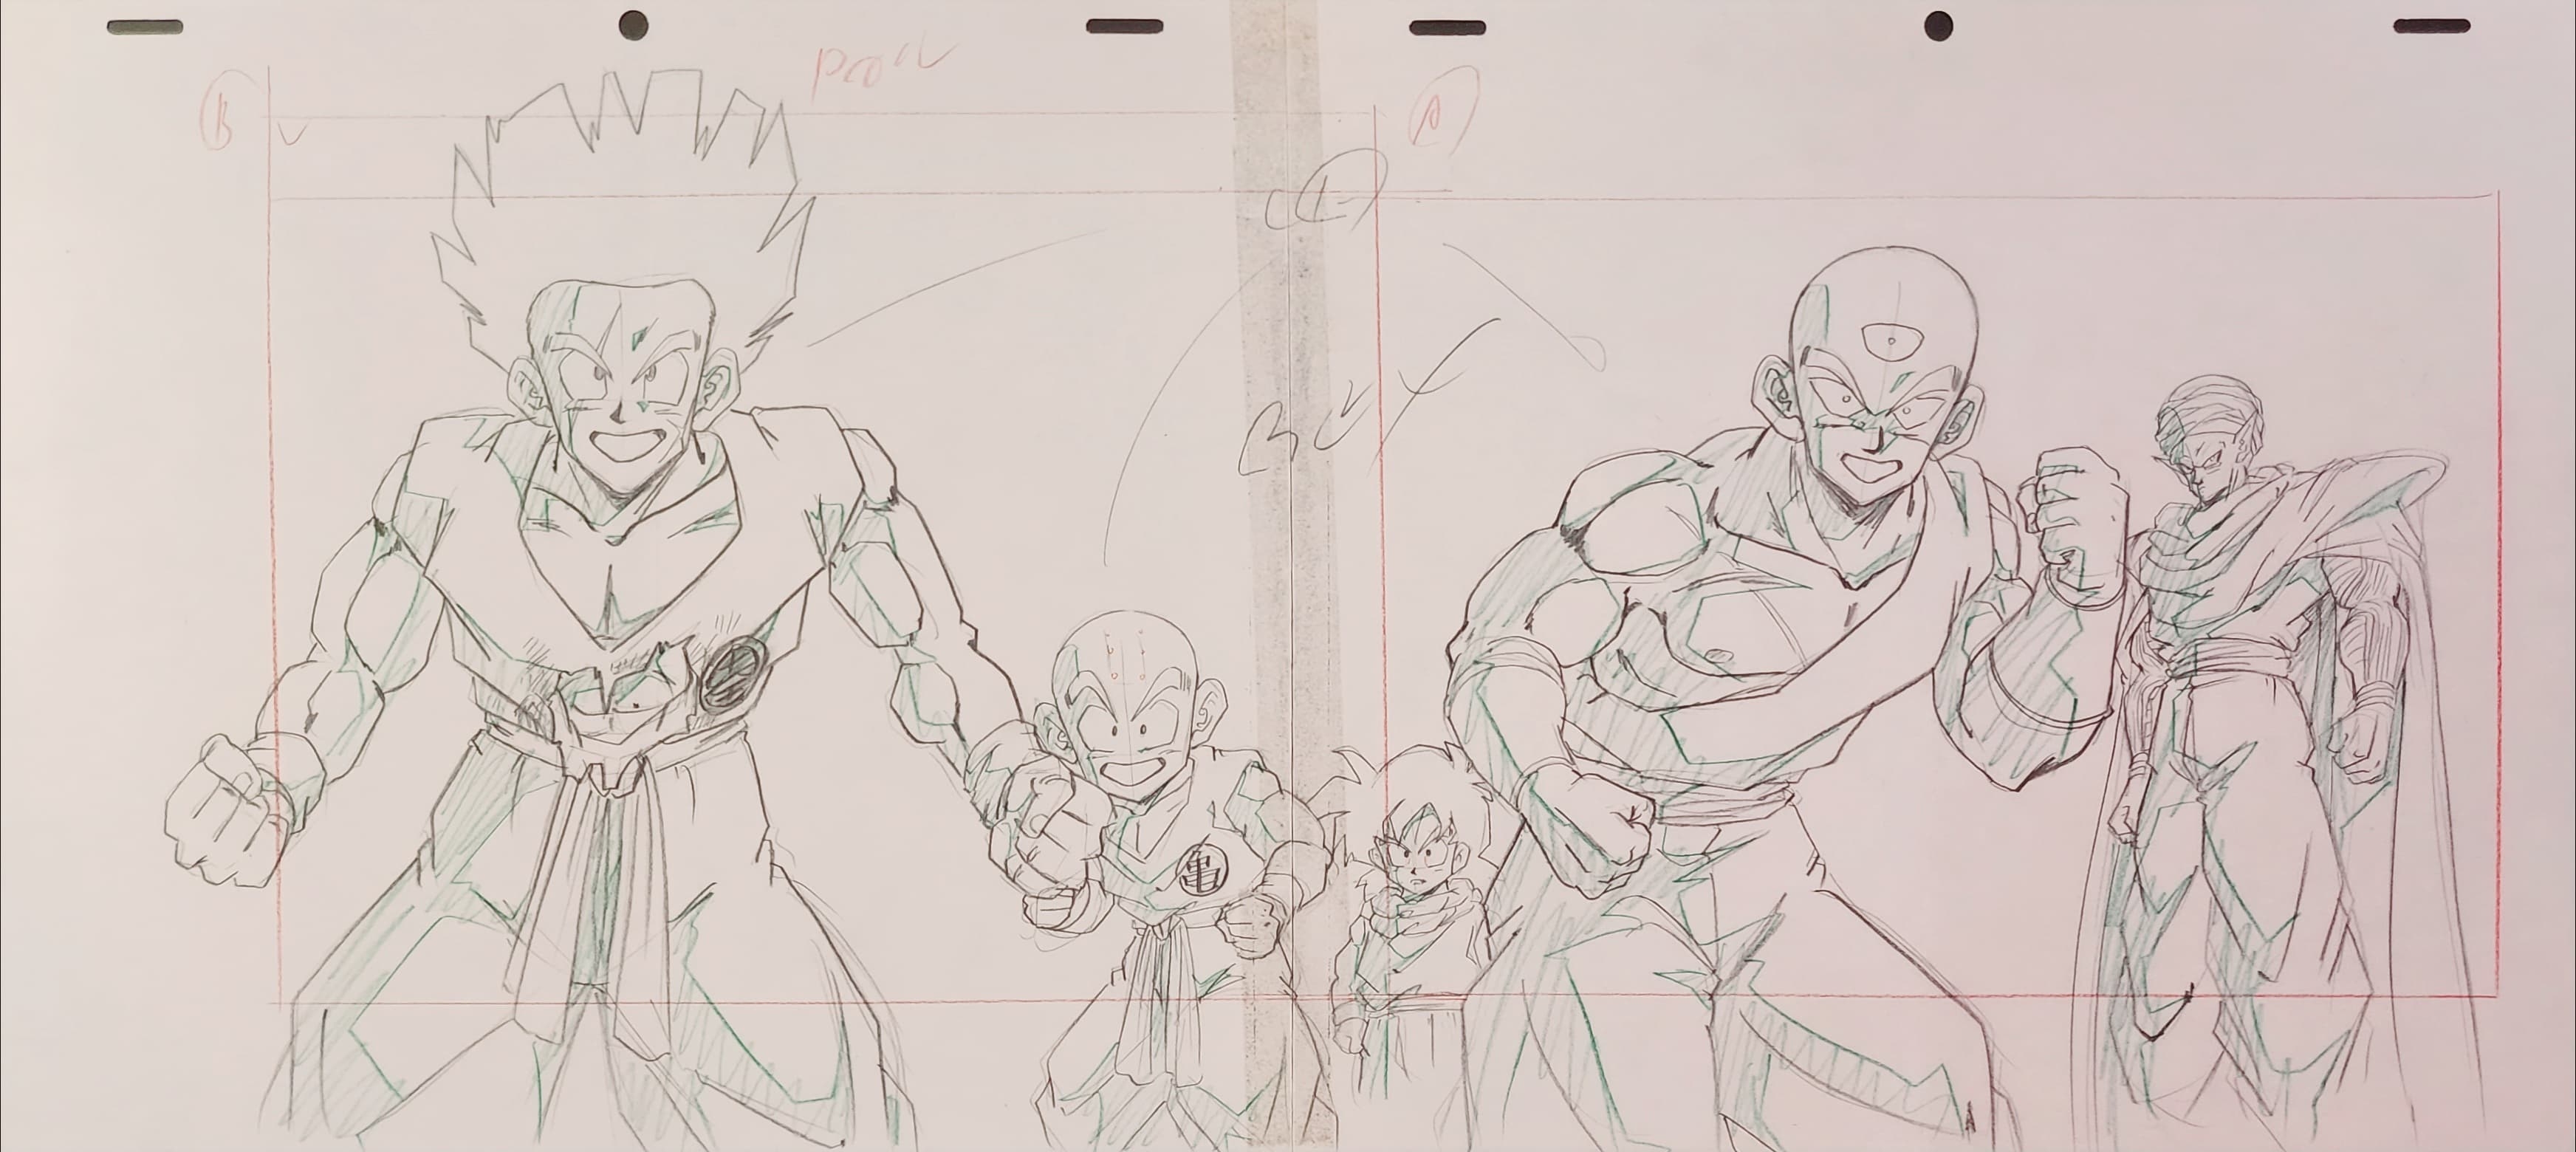 Dragon Ball Z Goku Animation Sketch, in Morgan Fisher's Anime Cels